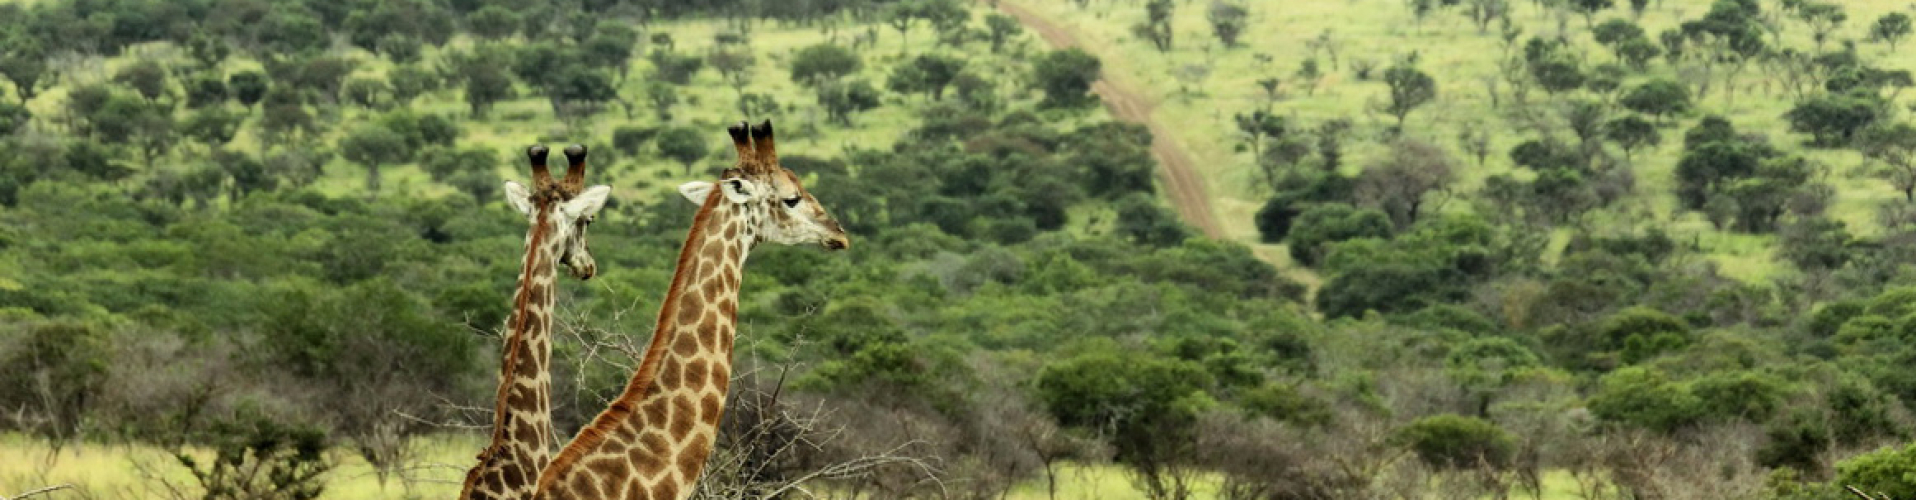 thanda-private-game-reserve-safari-lodge-kwazulu-natal-giraffe